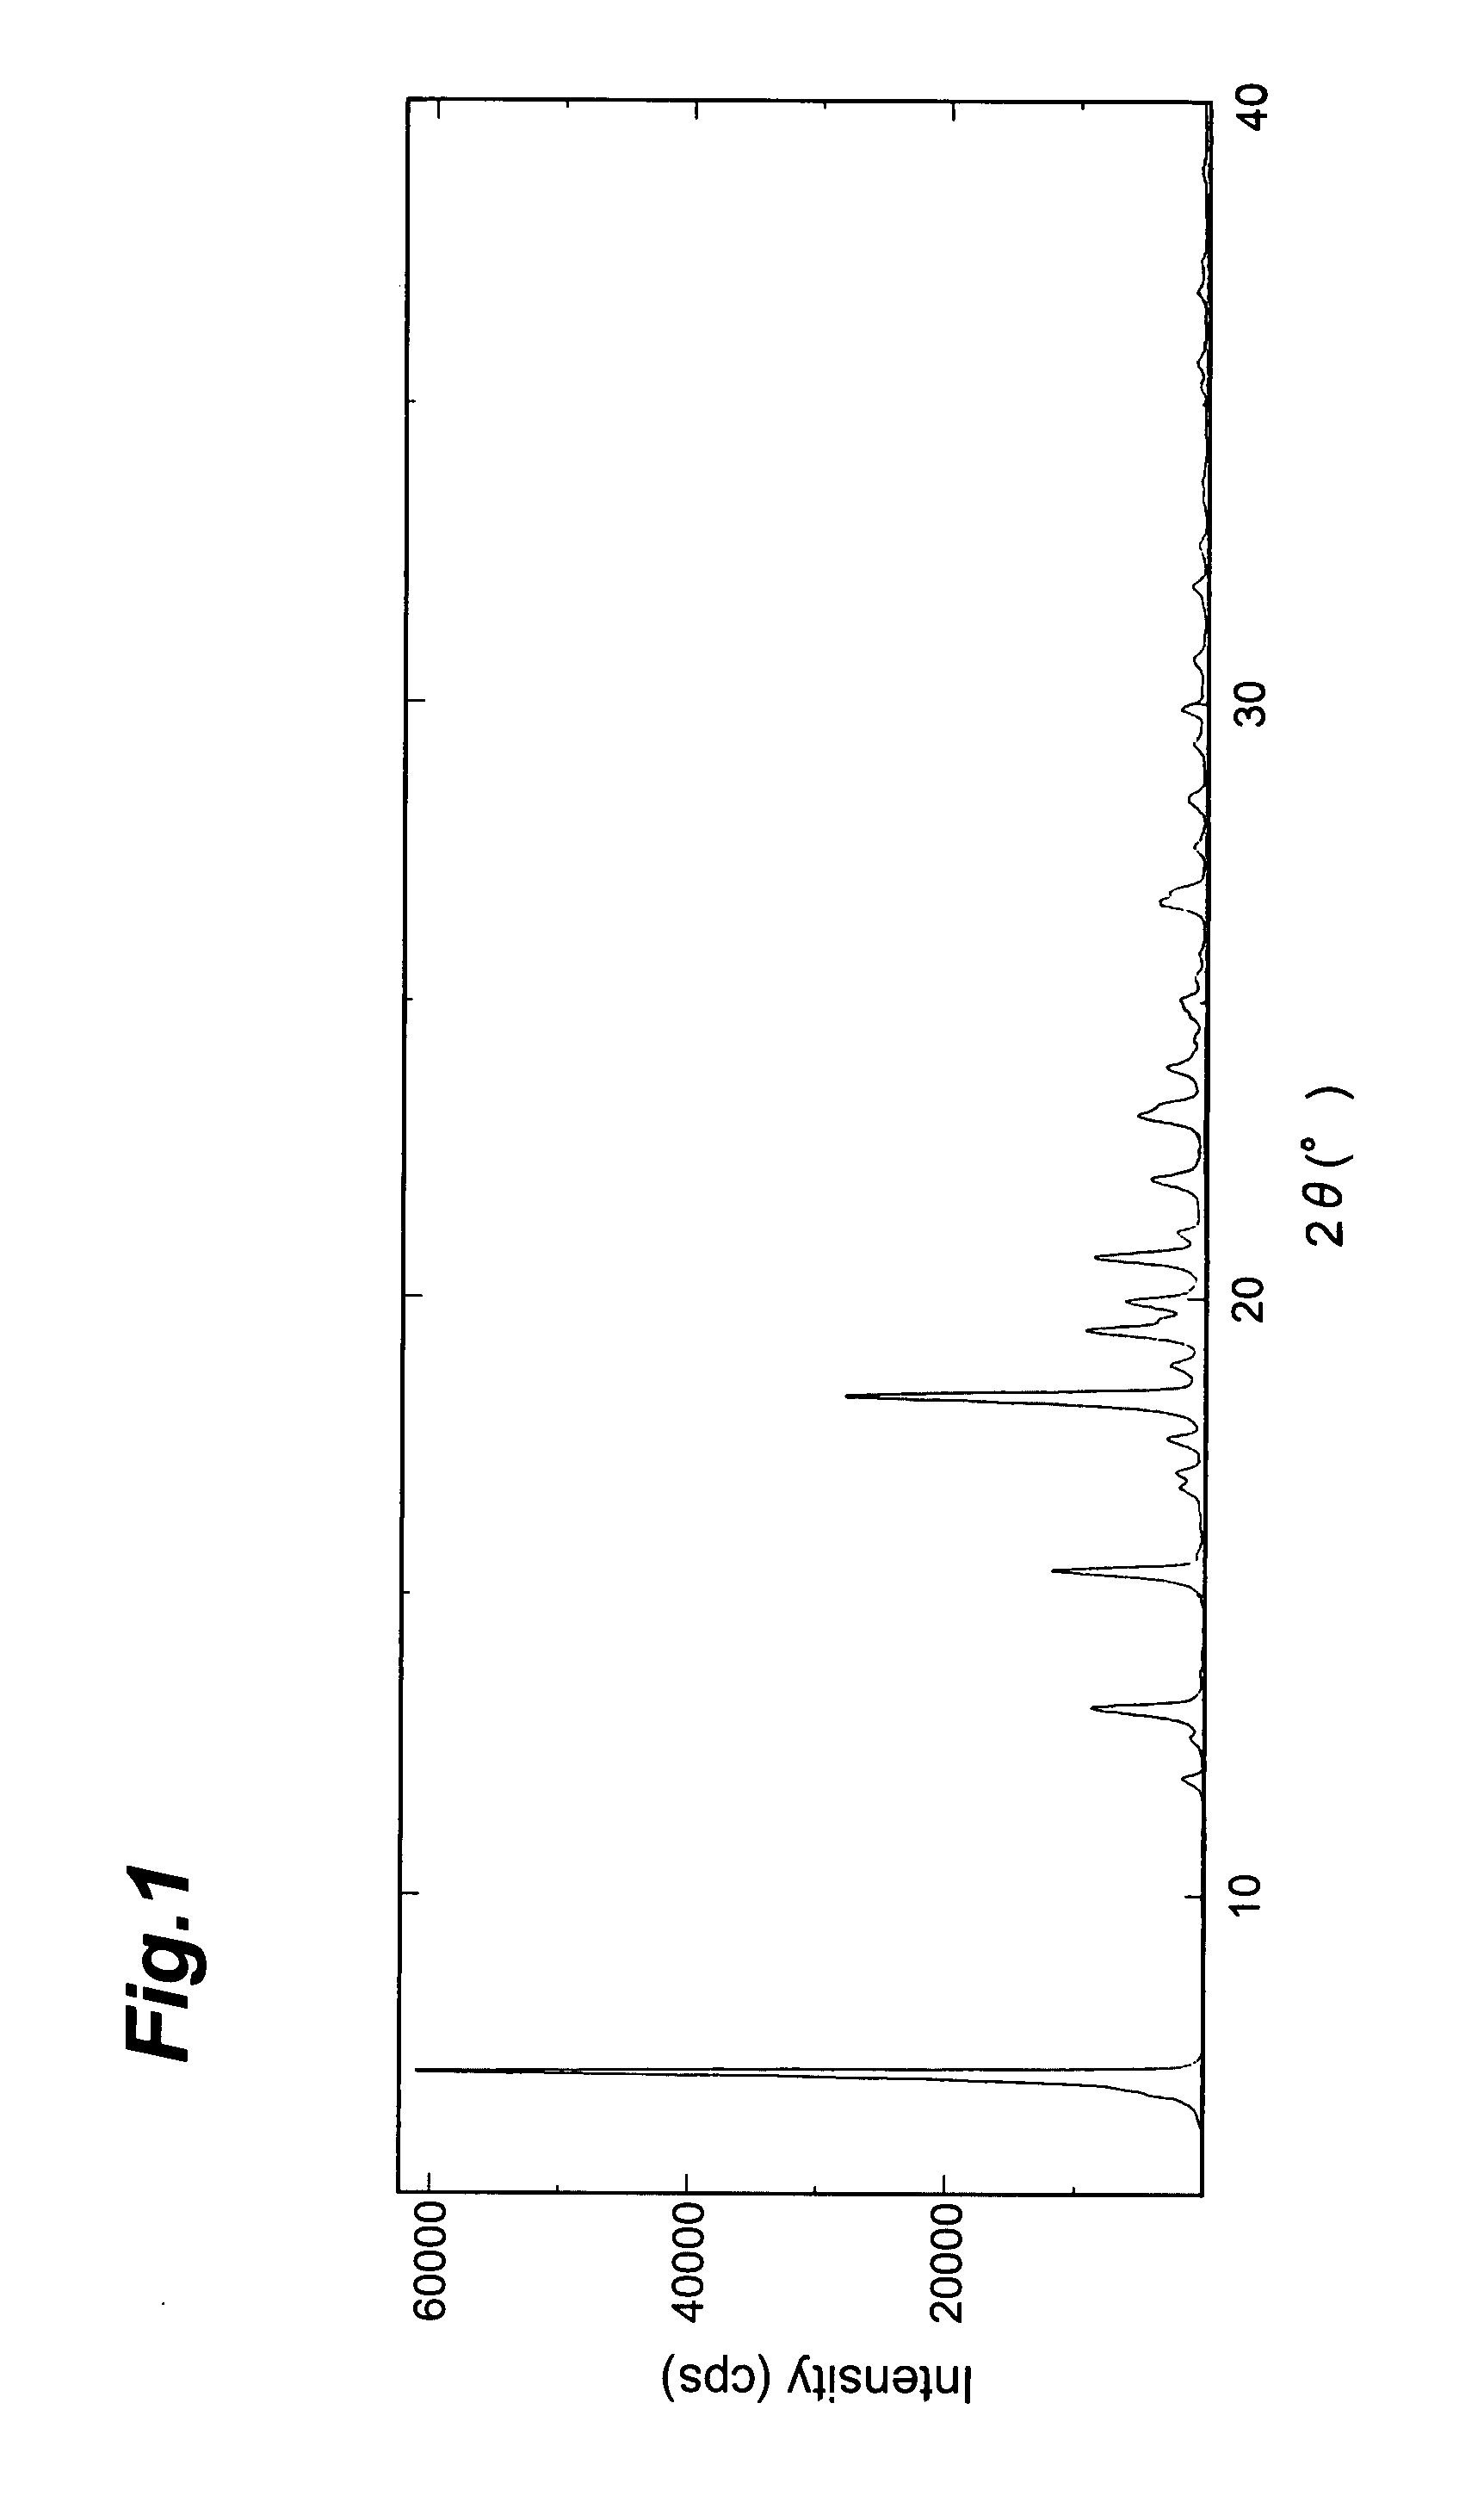 Crystal and Salt of 1-Cyclopropylmethyl-4-[2-(3,3,5,5-Tetramethylcyclohexyl)Phenyl]Piperazine